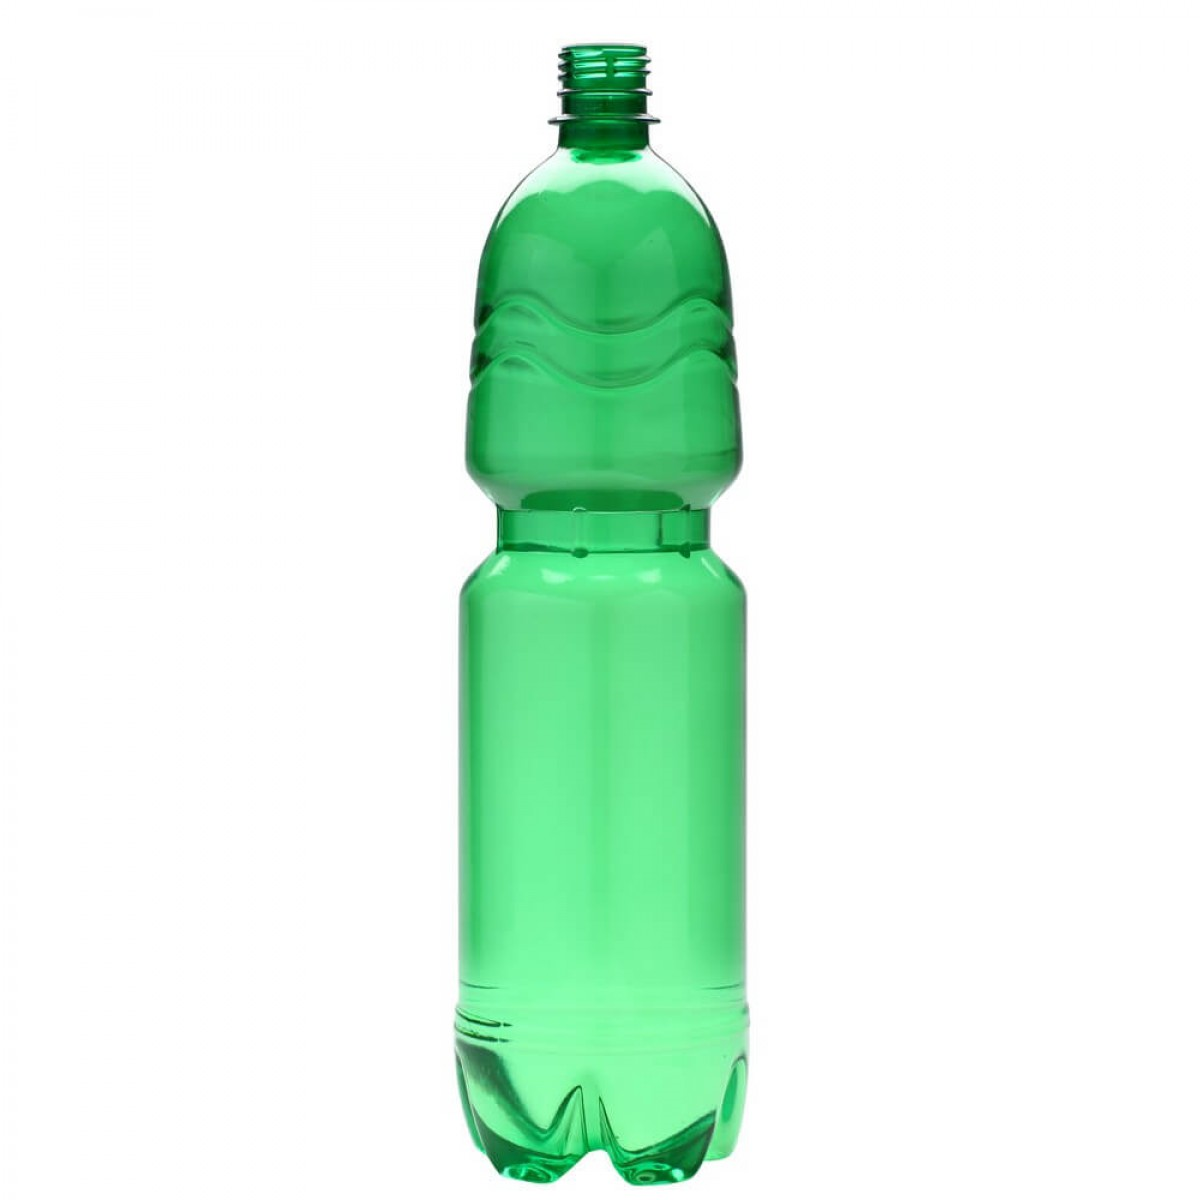 Бутылки зеленого цвета. Перформа 1.5 бутылка ПЭТ. Зеленая пластиковая бутылка. ПЭТ бутылка зеленая. Бутылка 1.5 литра.